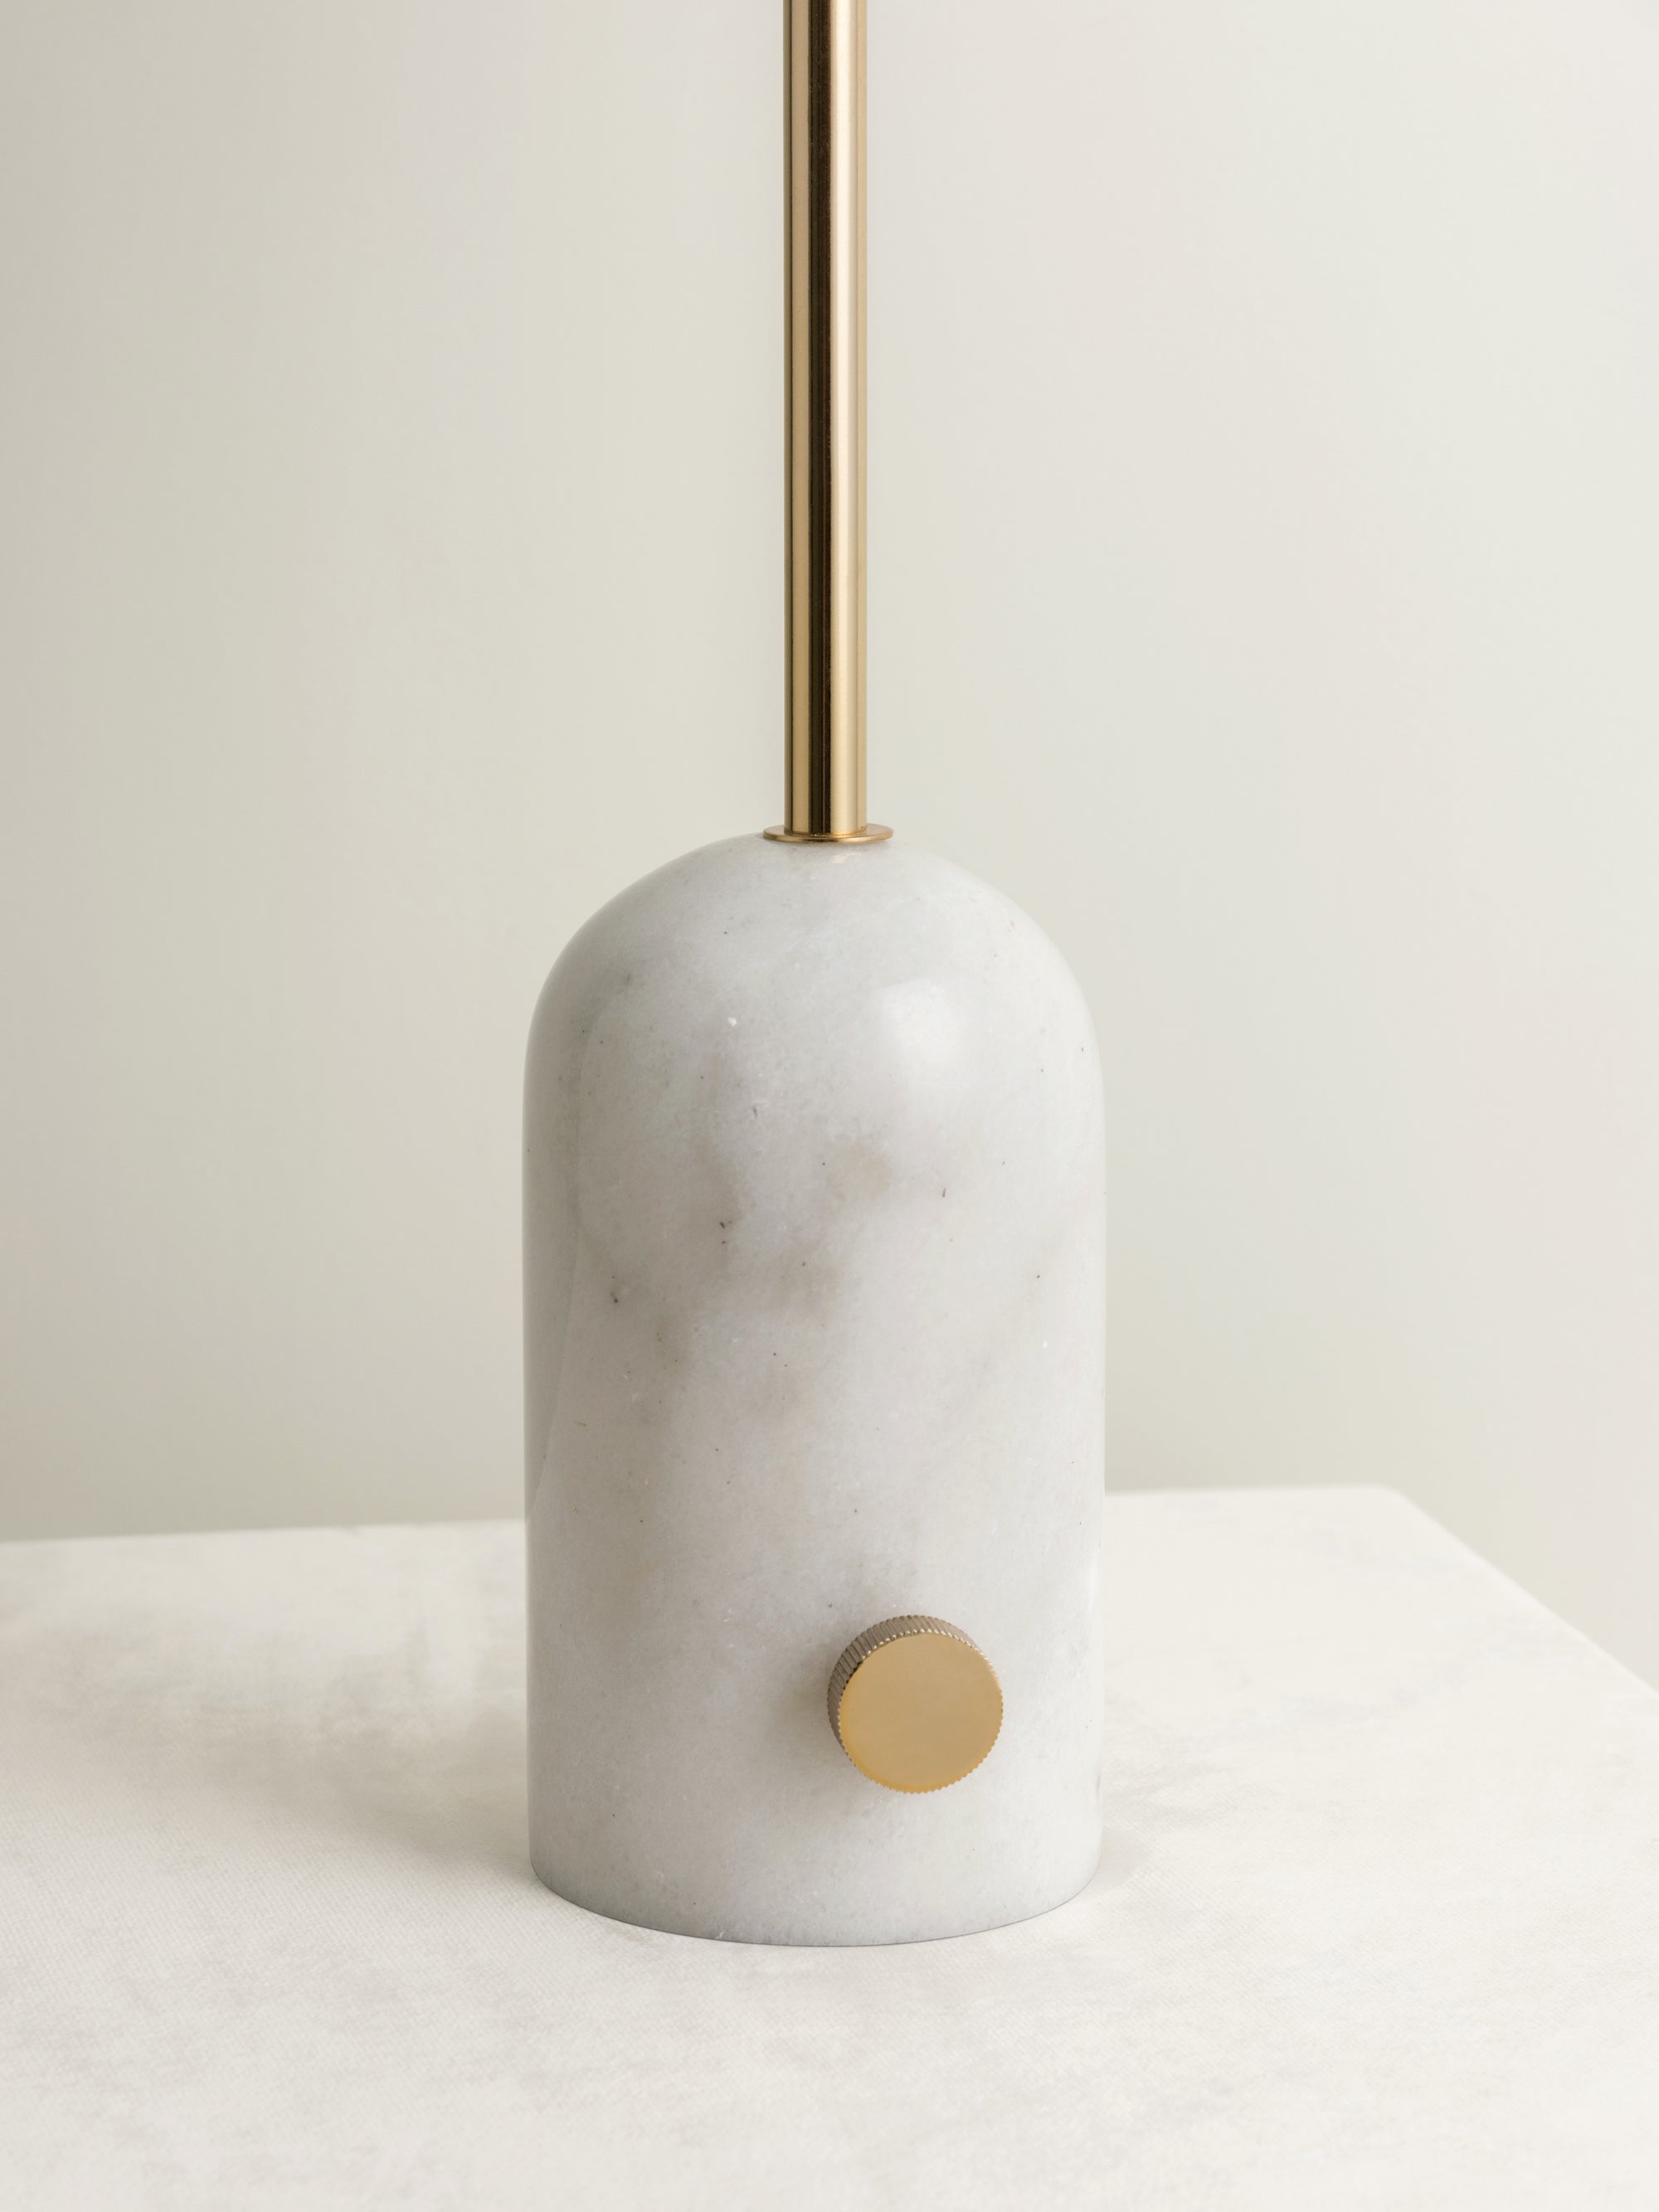 Penn - white marble and brass table lamp | Table Lamp | Lights & Lamps Inc | Modern Affordable Designer Lighting | USA